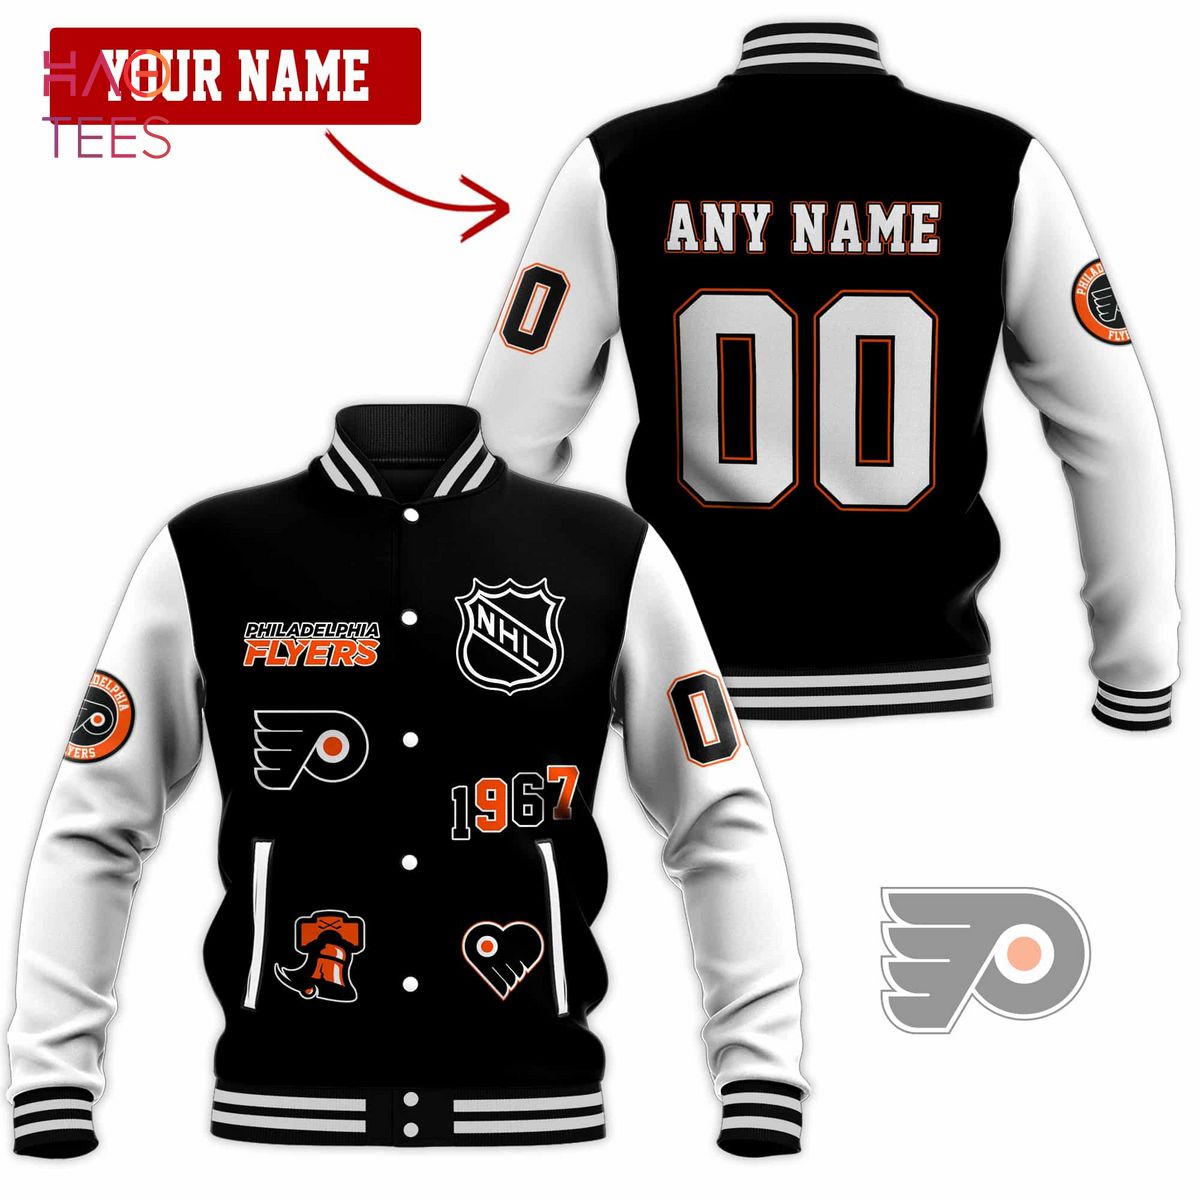 Philadelphia Flyers NHL Custom Name Hawaiian Shirt Hot Design For Fans